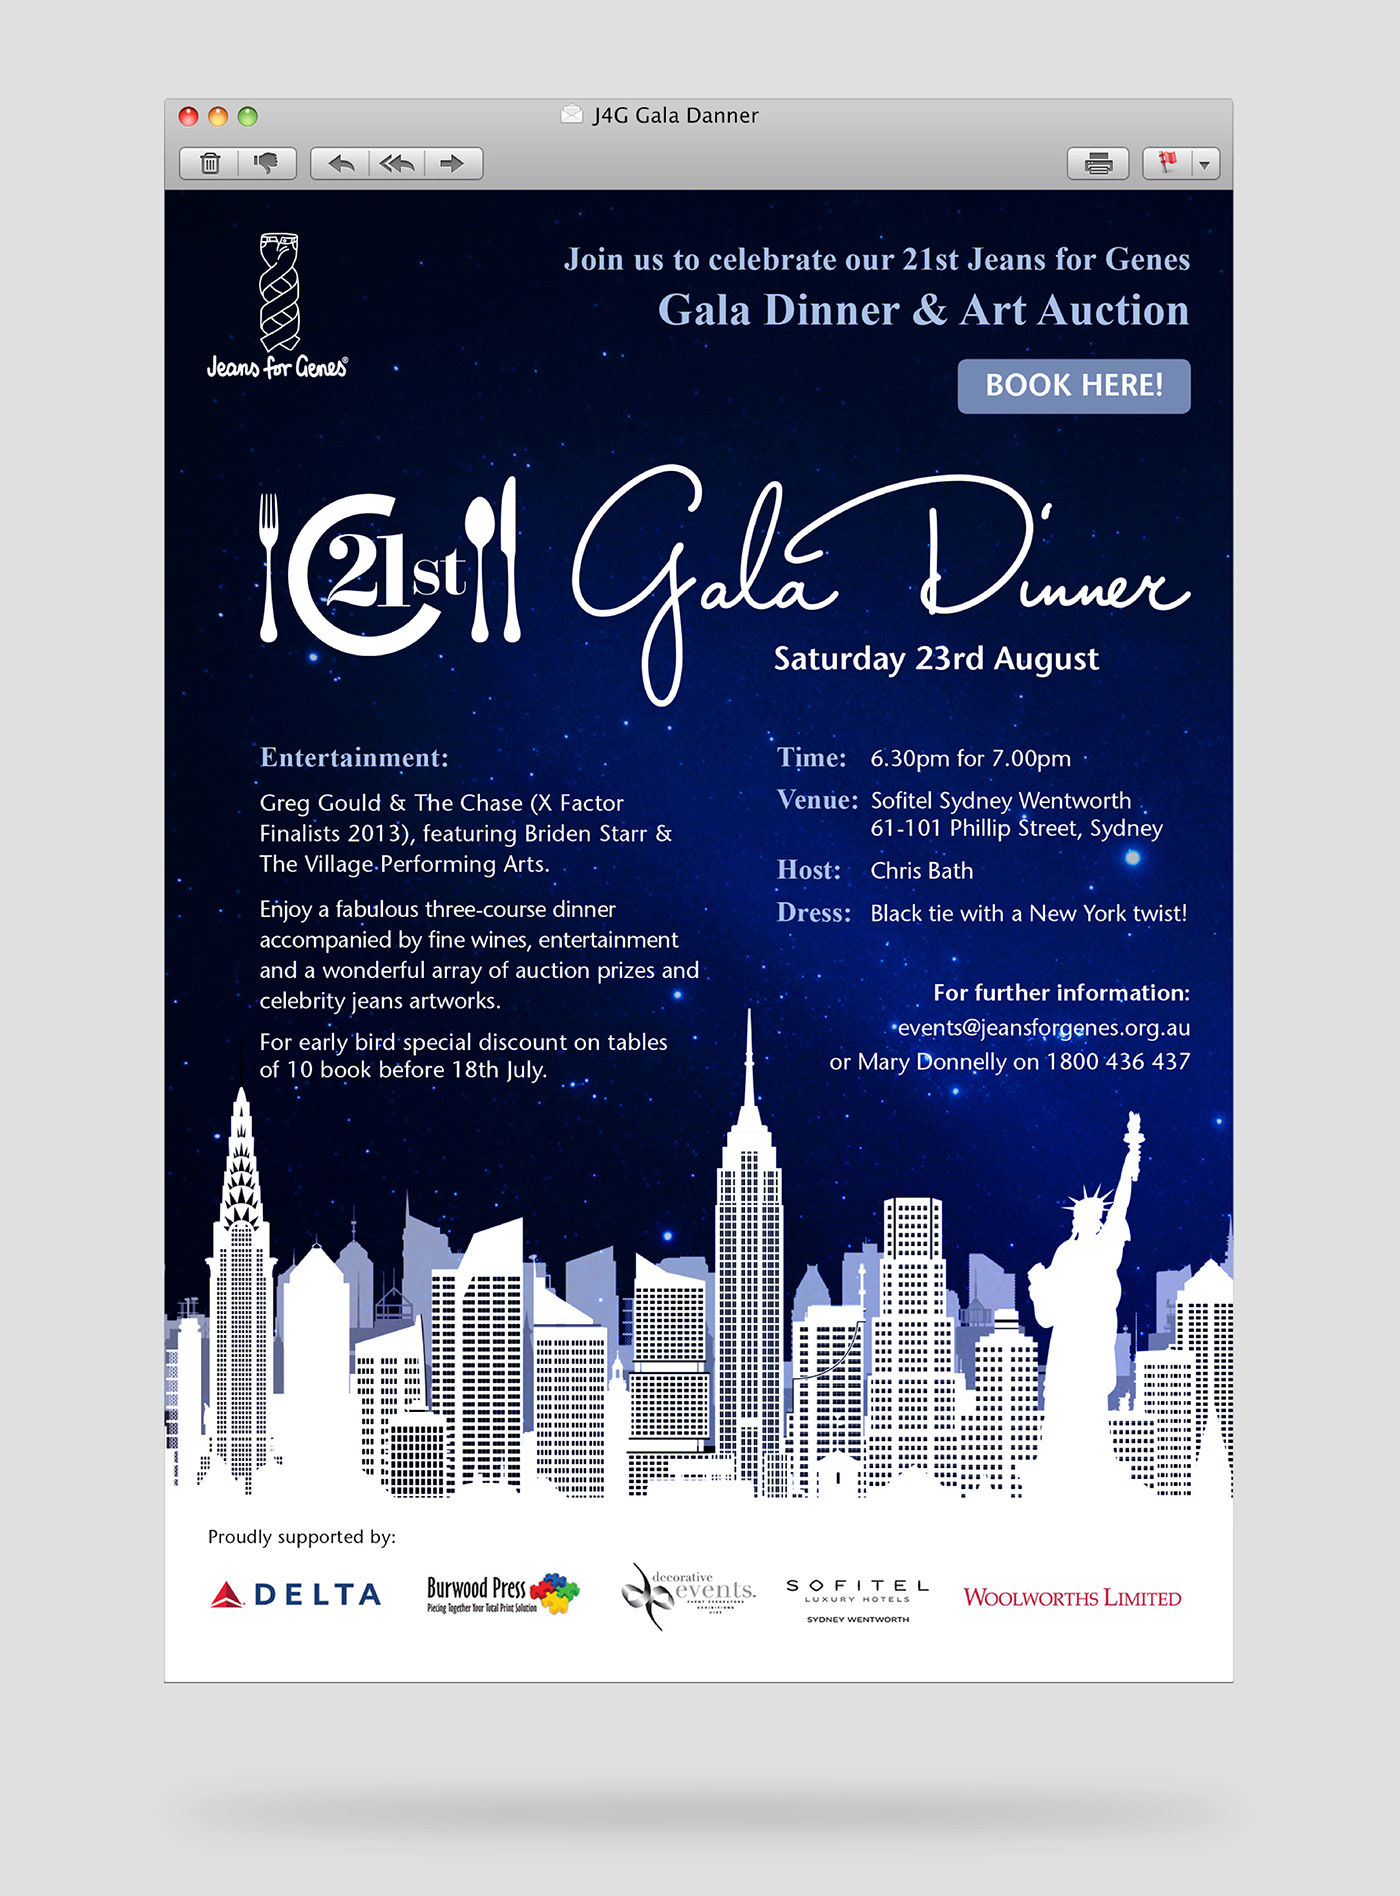 #C21st Gala Dinner Online Invitation